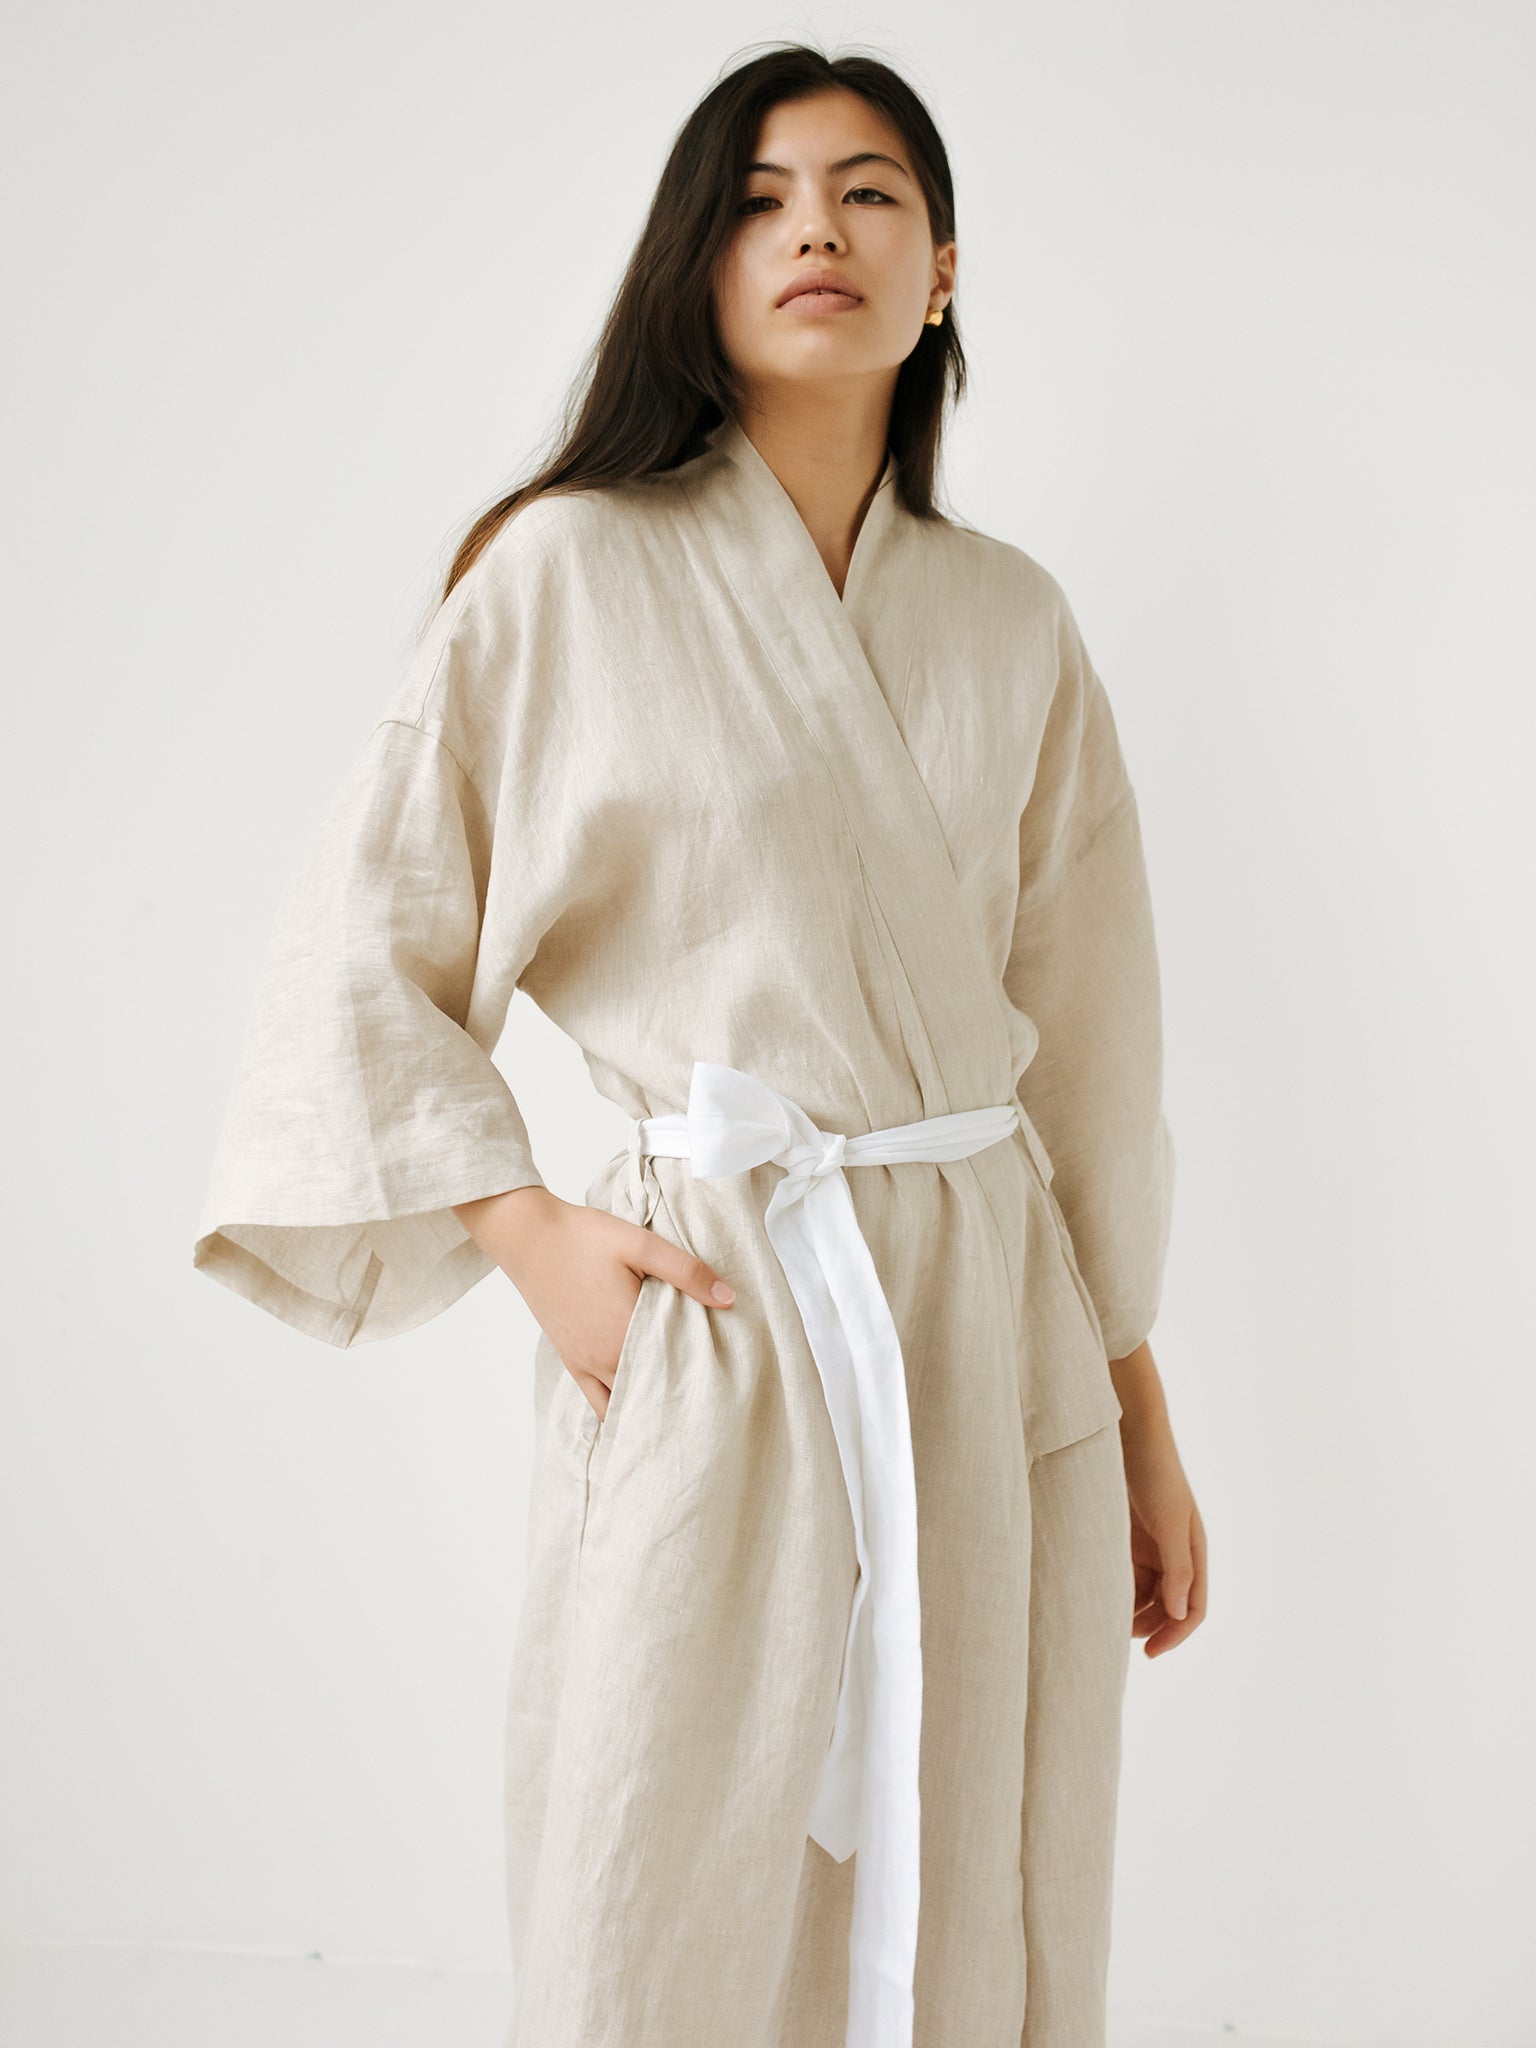 Deiji Studios | Full Length Linen Robe in Oatmeal | The UNDONE by Deiji ...